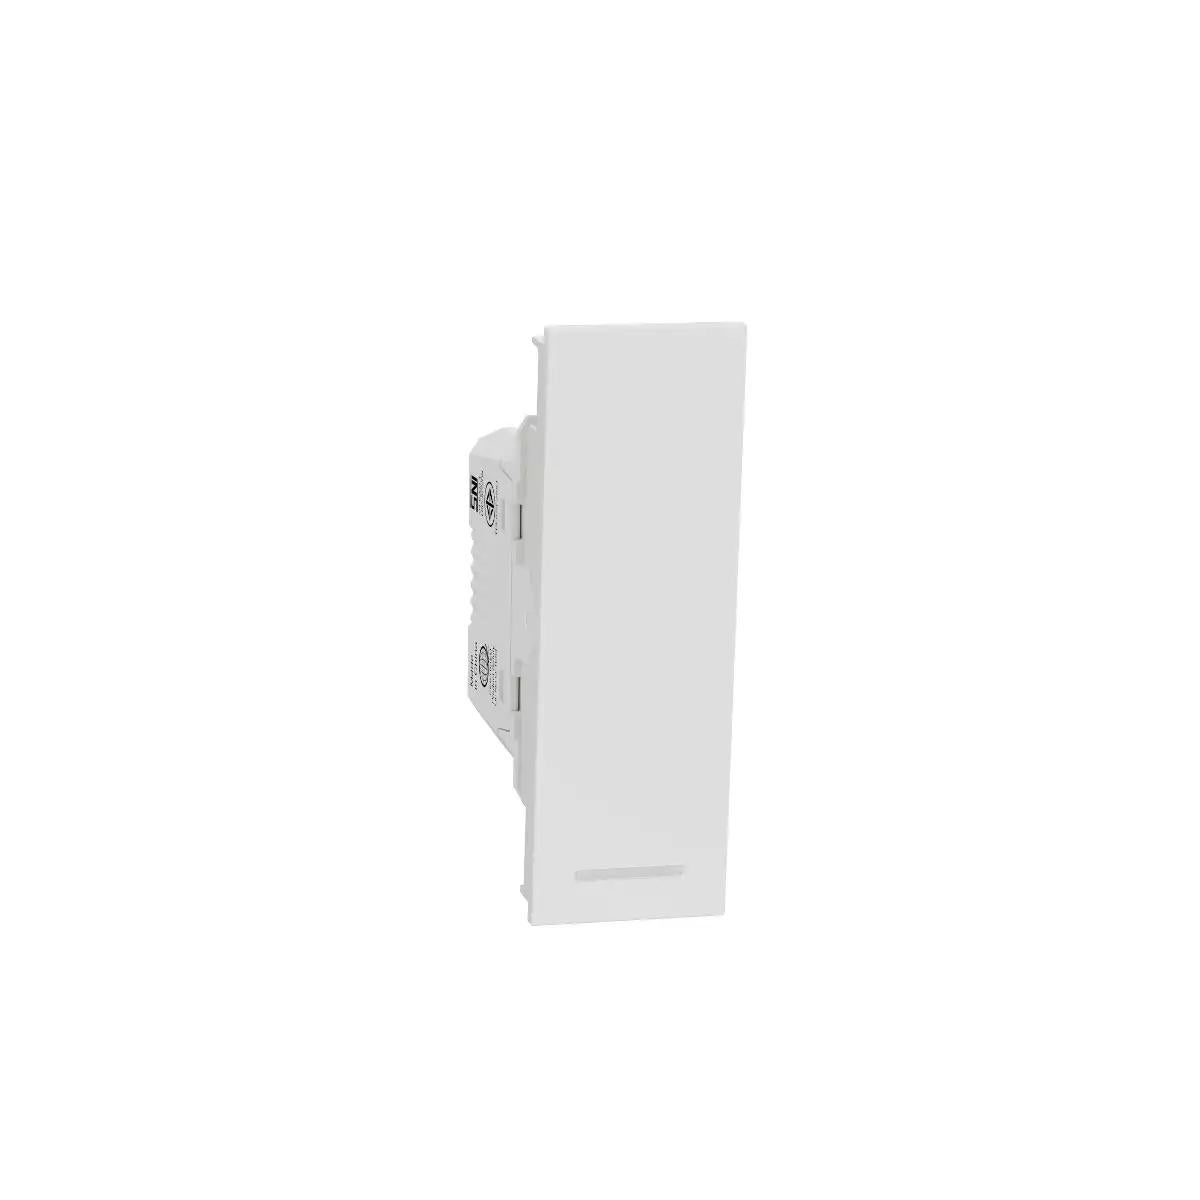 Intermediate Switch, Avataron A, 16AX 250V, S sized, White